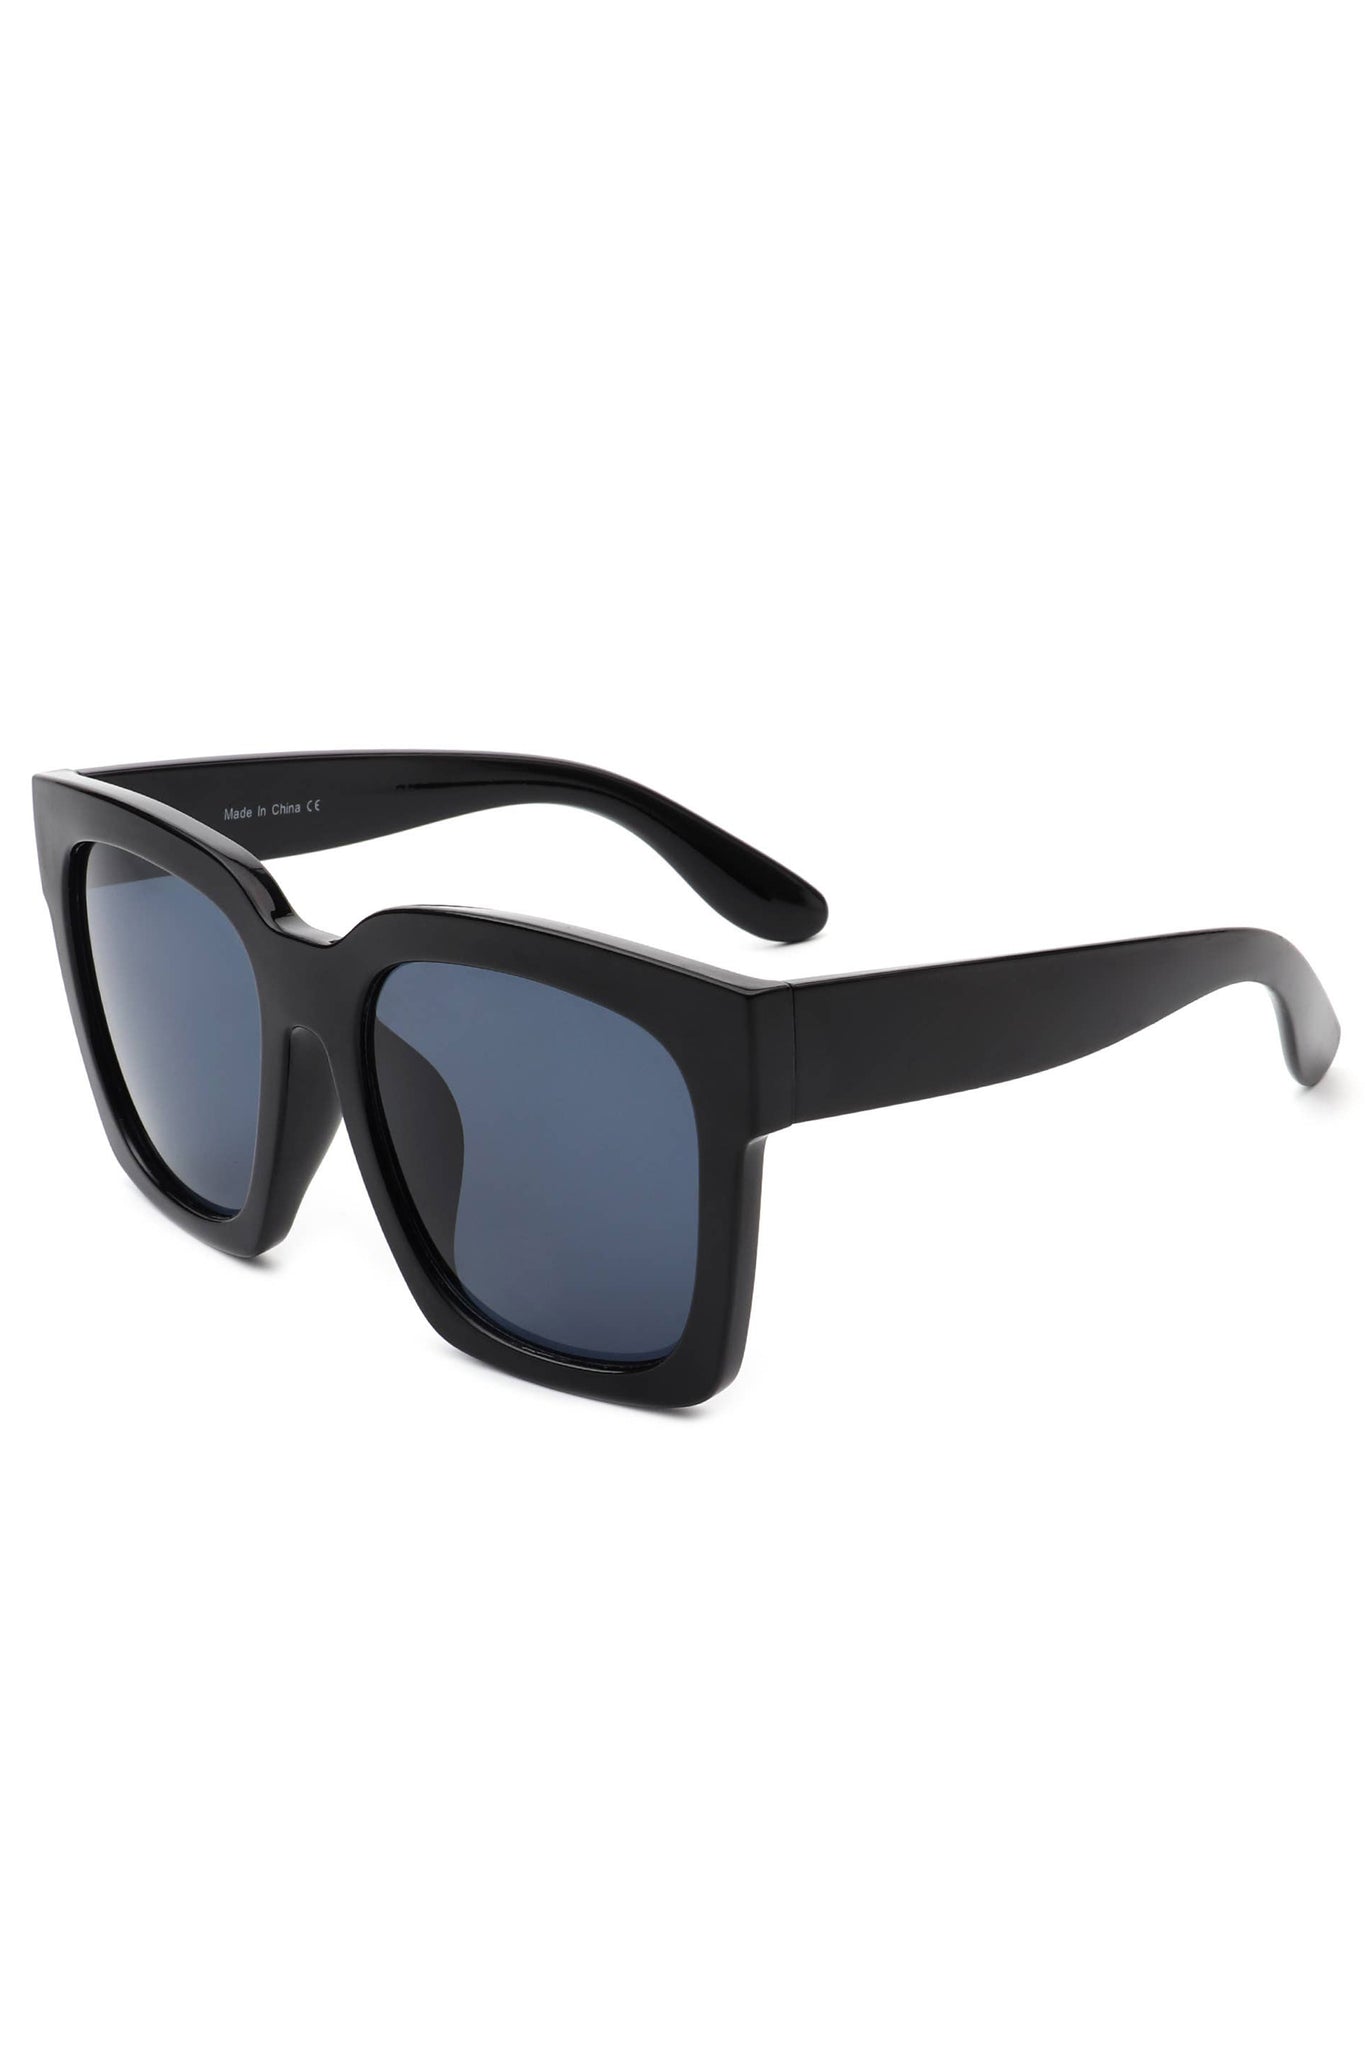 Retro Cool Sunglasses